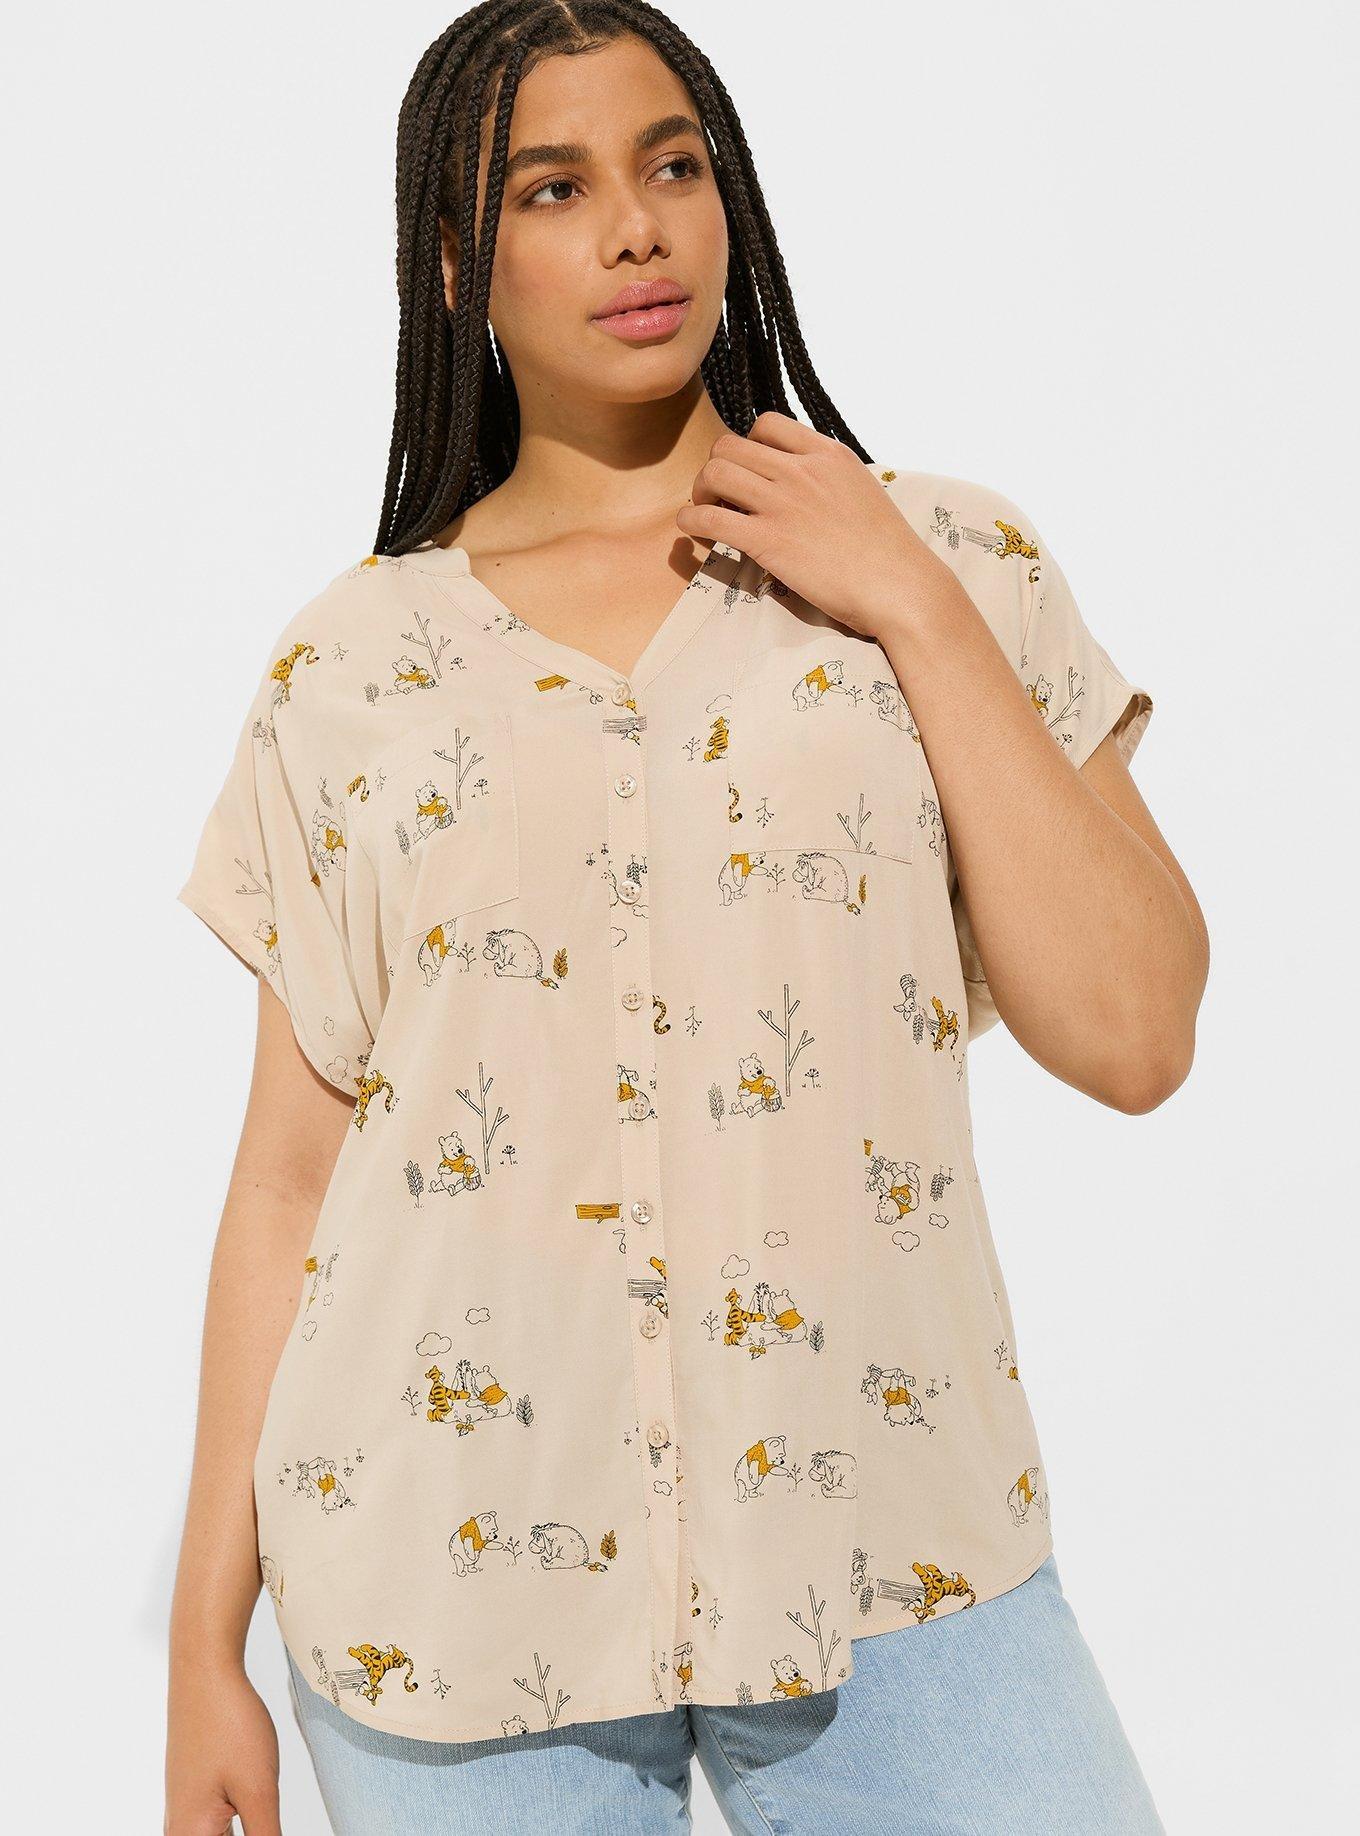 RITERA Plus Size Tops for Women Casual Long Sleeve Fall Shirts Raglan  Blouse Brown Blue Plaid 3XL at  Women's Clothing store